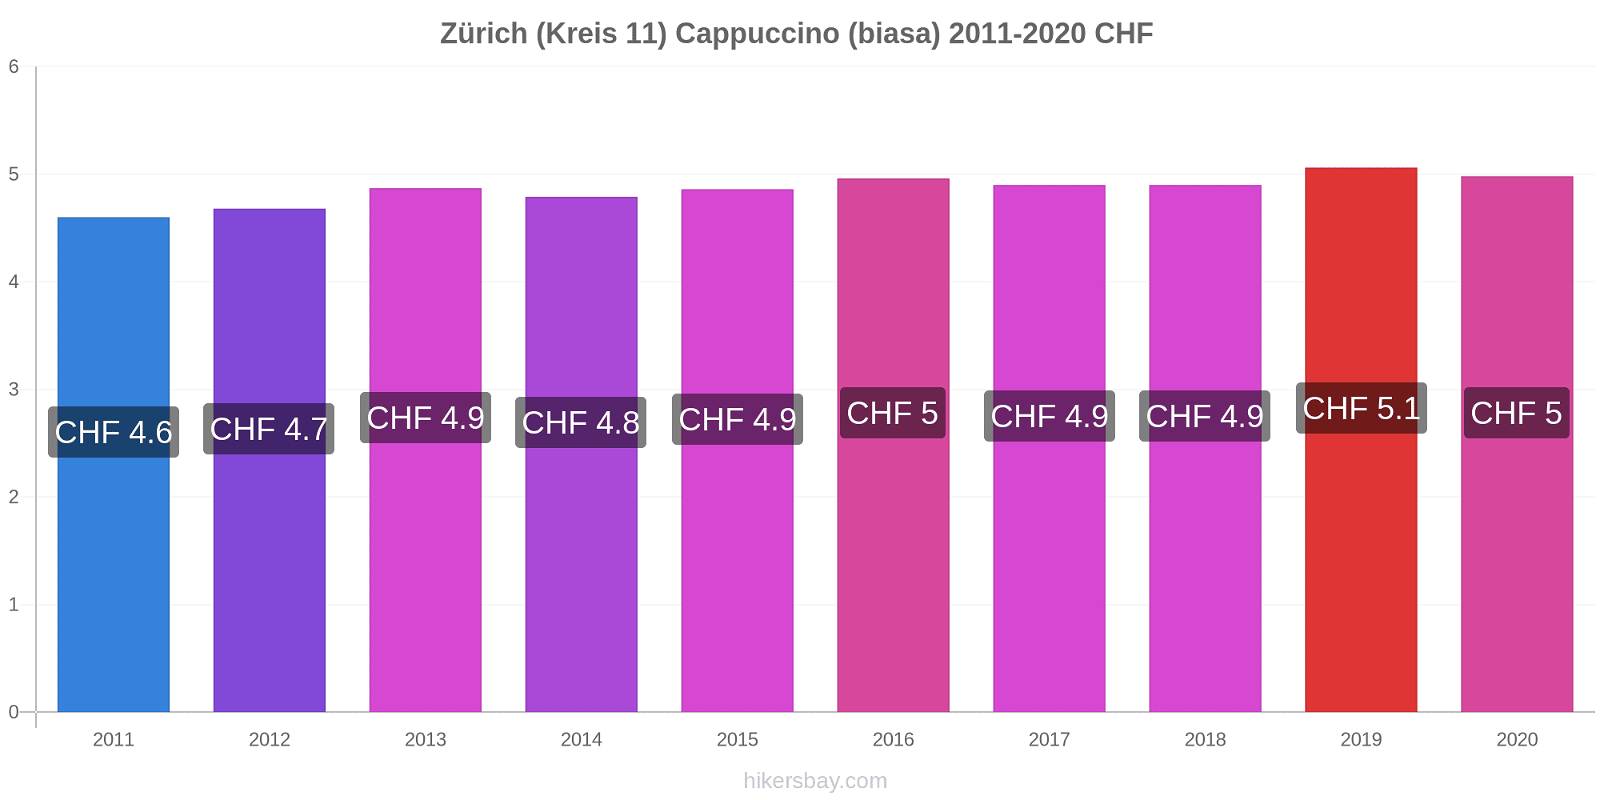 Zürich (Kreis 11) perubahan harga Cappuccino (biasa) hikersbay.com